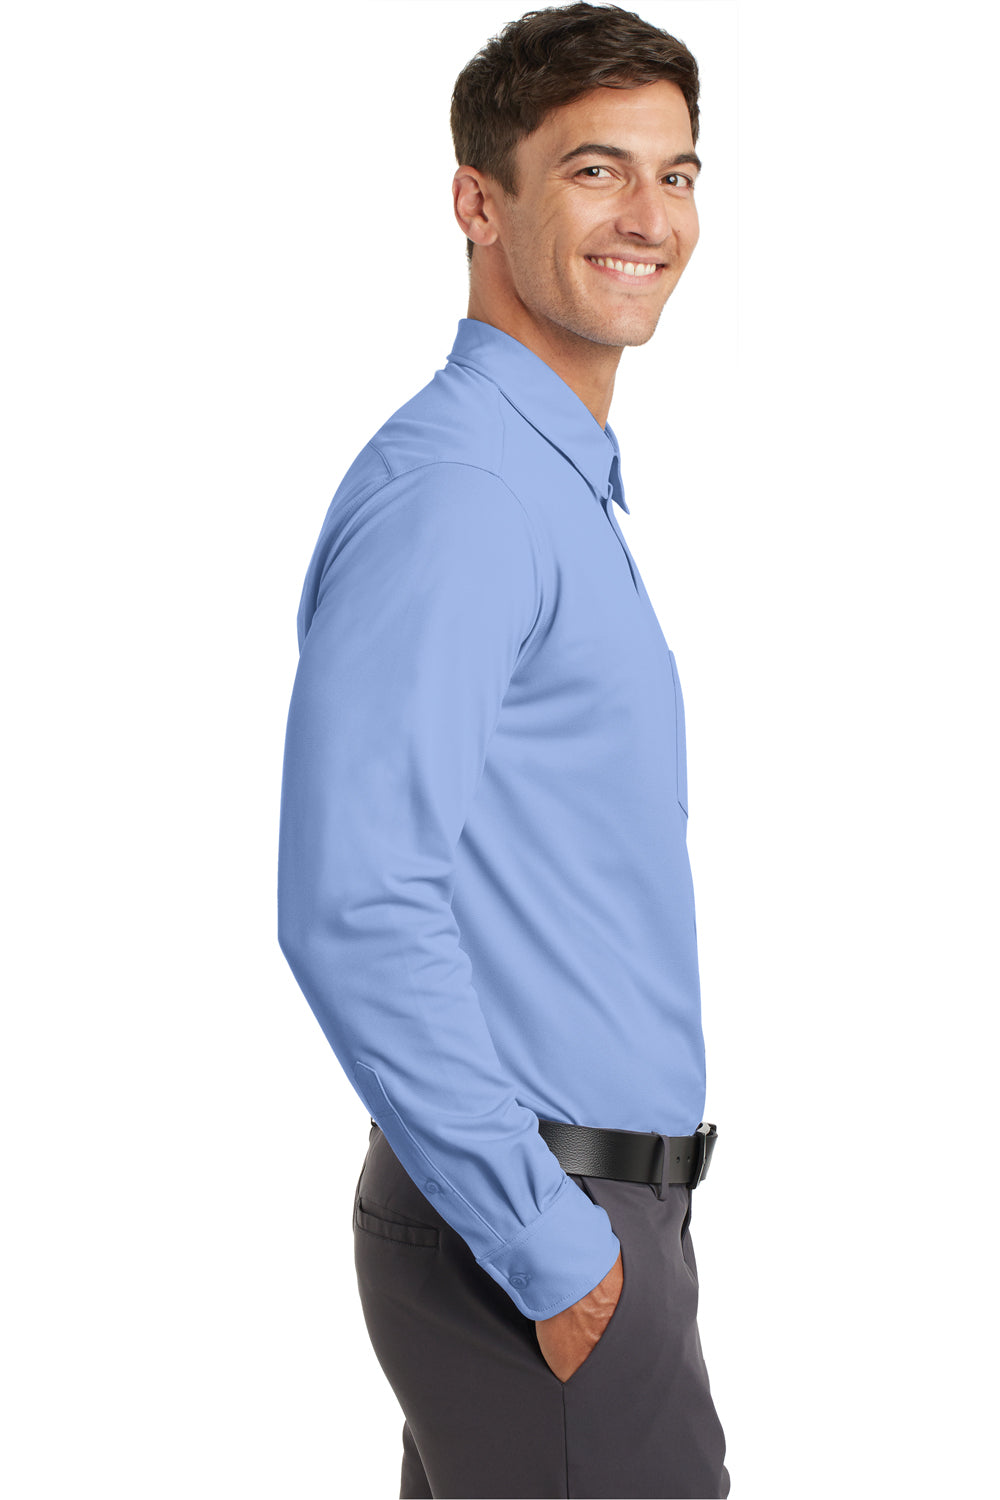 Port Authority K570 Mens Dimension Moisture Wicking Long Sleeve Button Down Shirt w/ Pocket Dress Shirt Blue Side